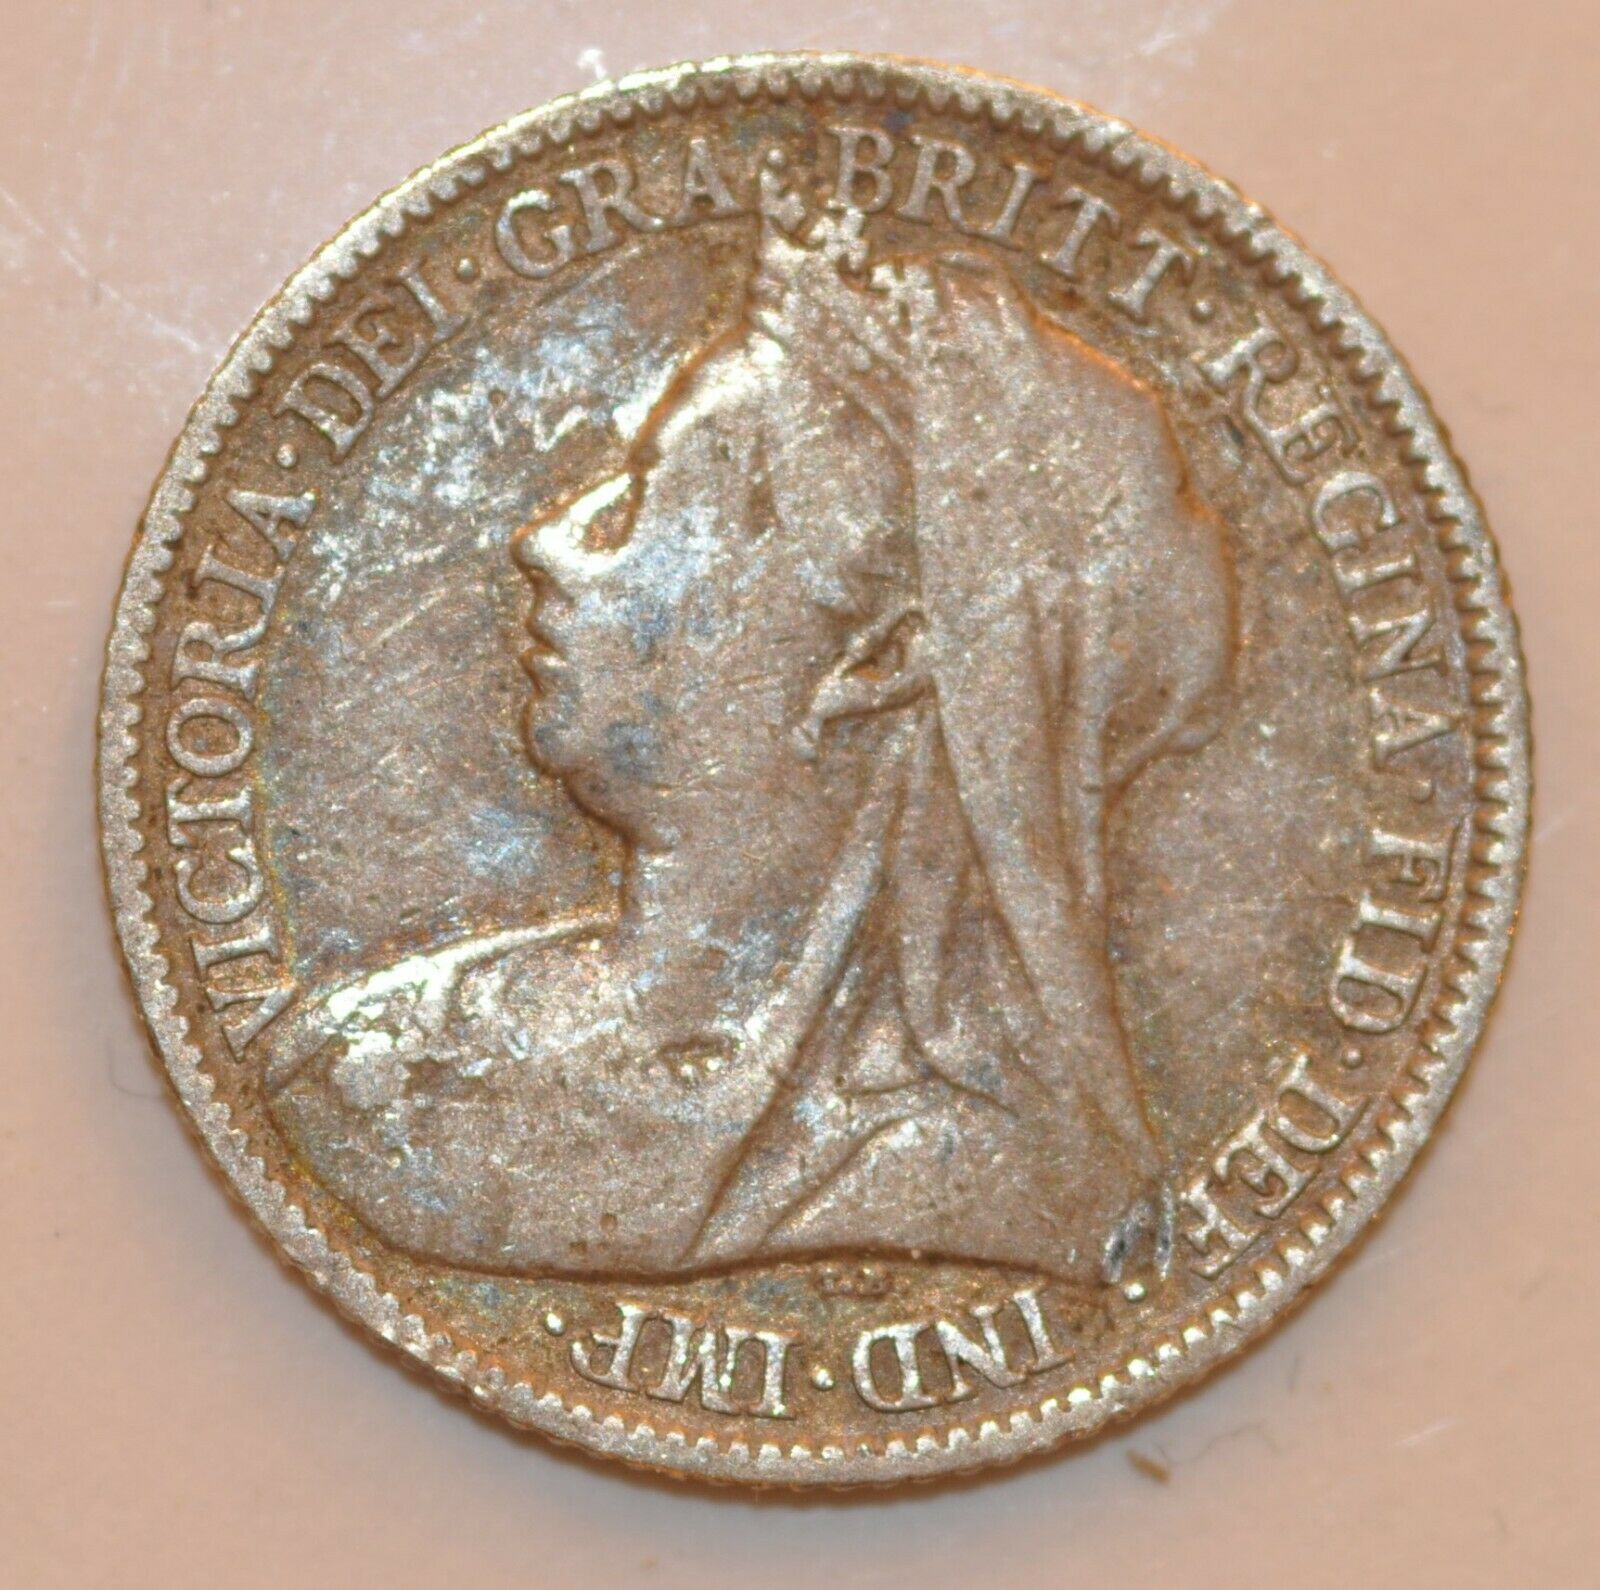 1895 Six Pence Great Britain